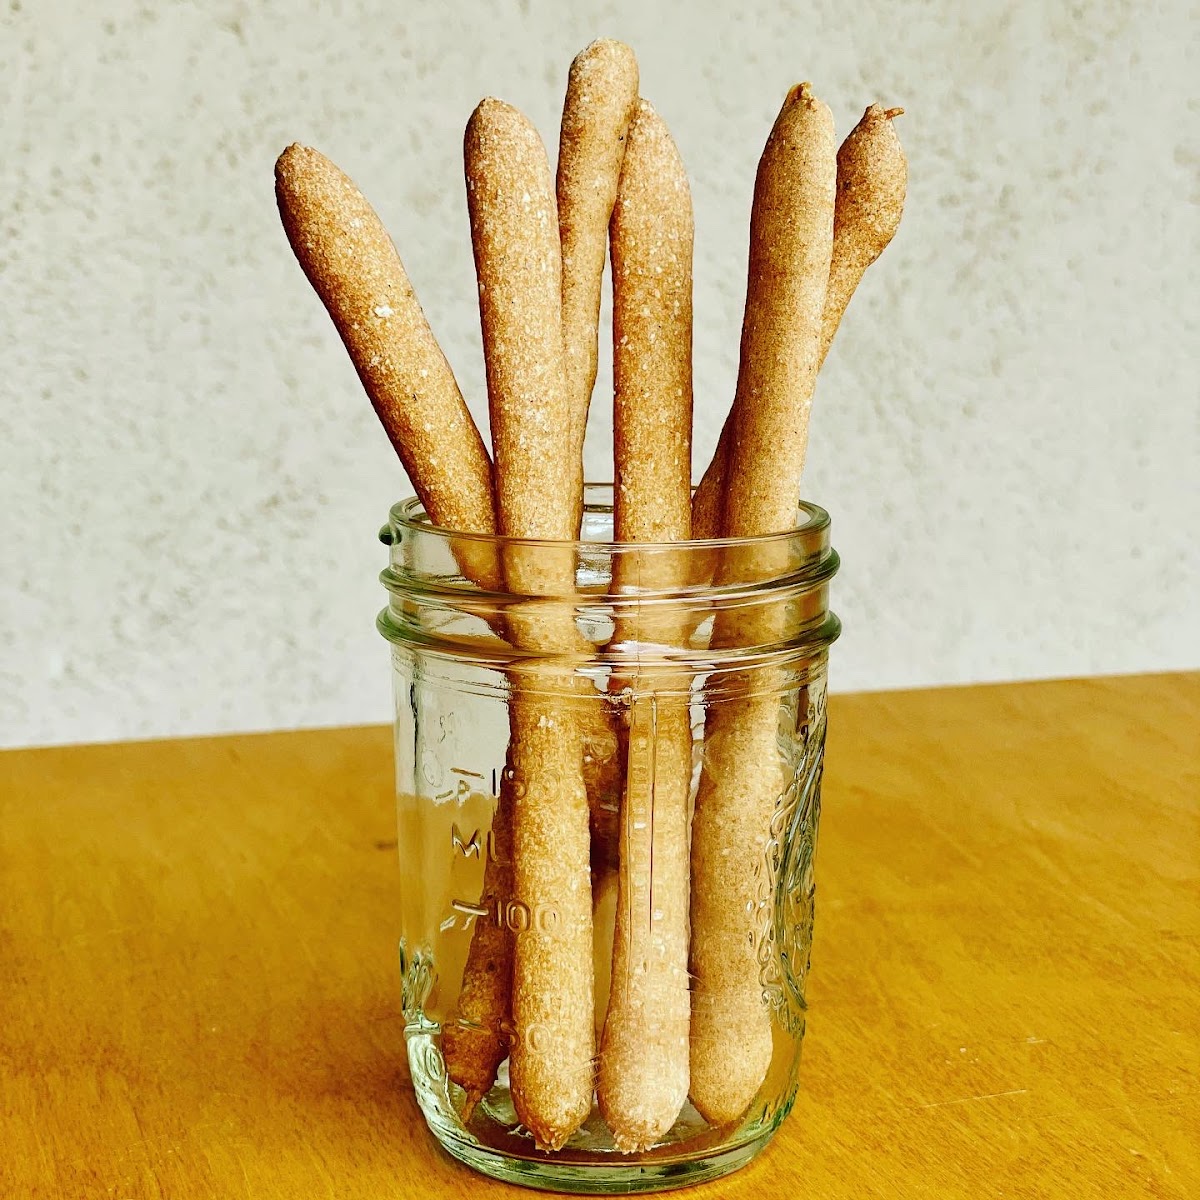 grissini-style breadsticks